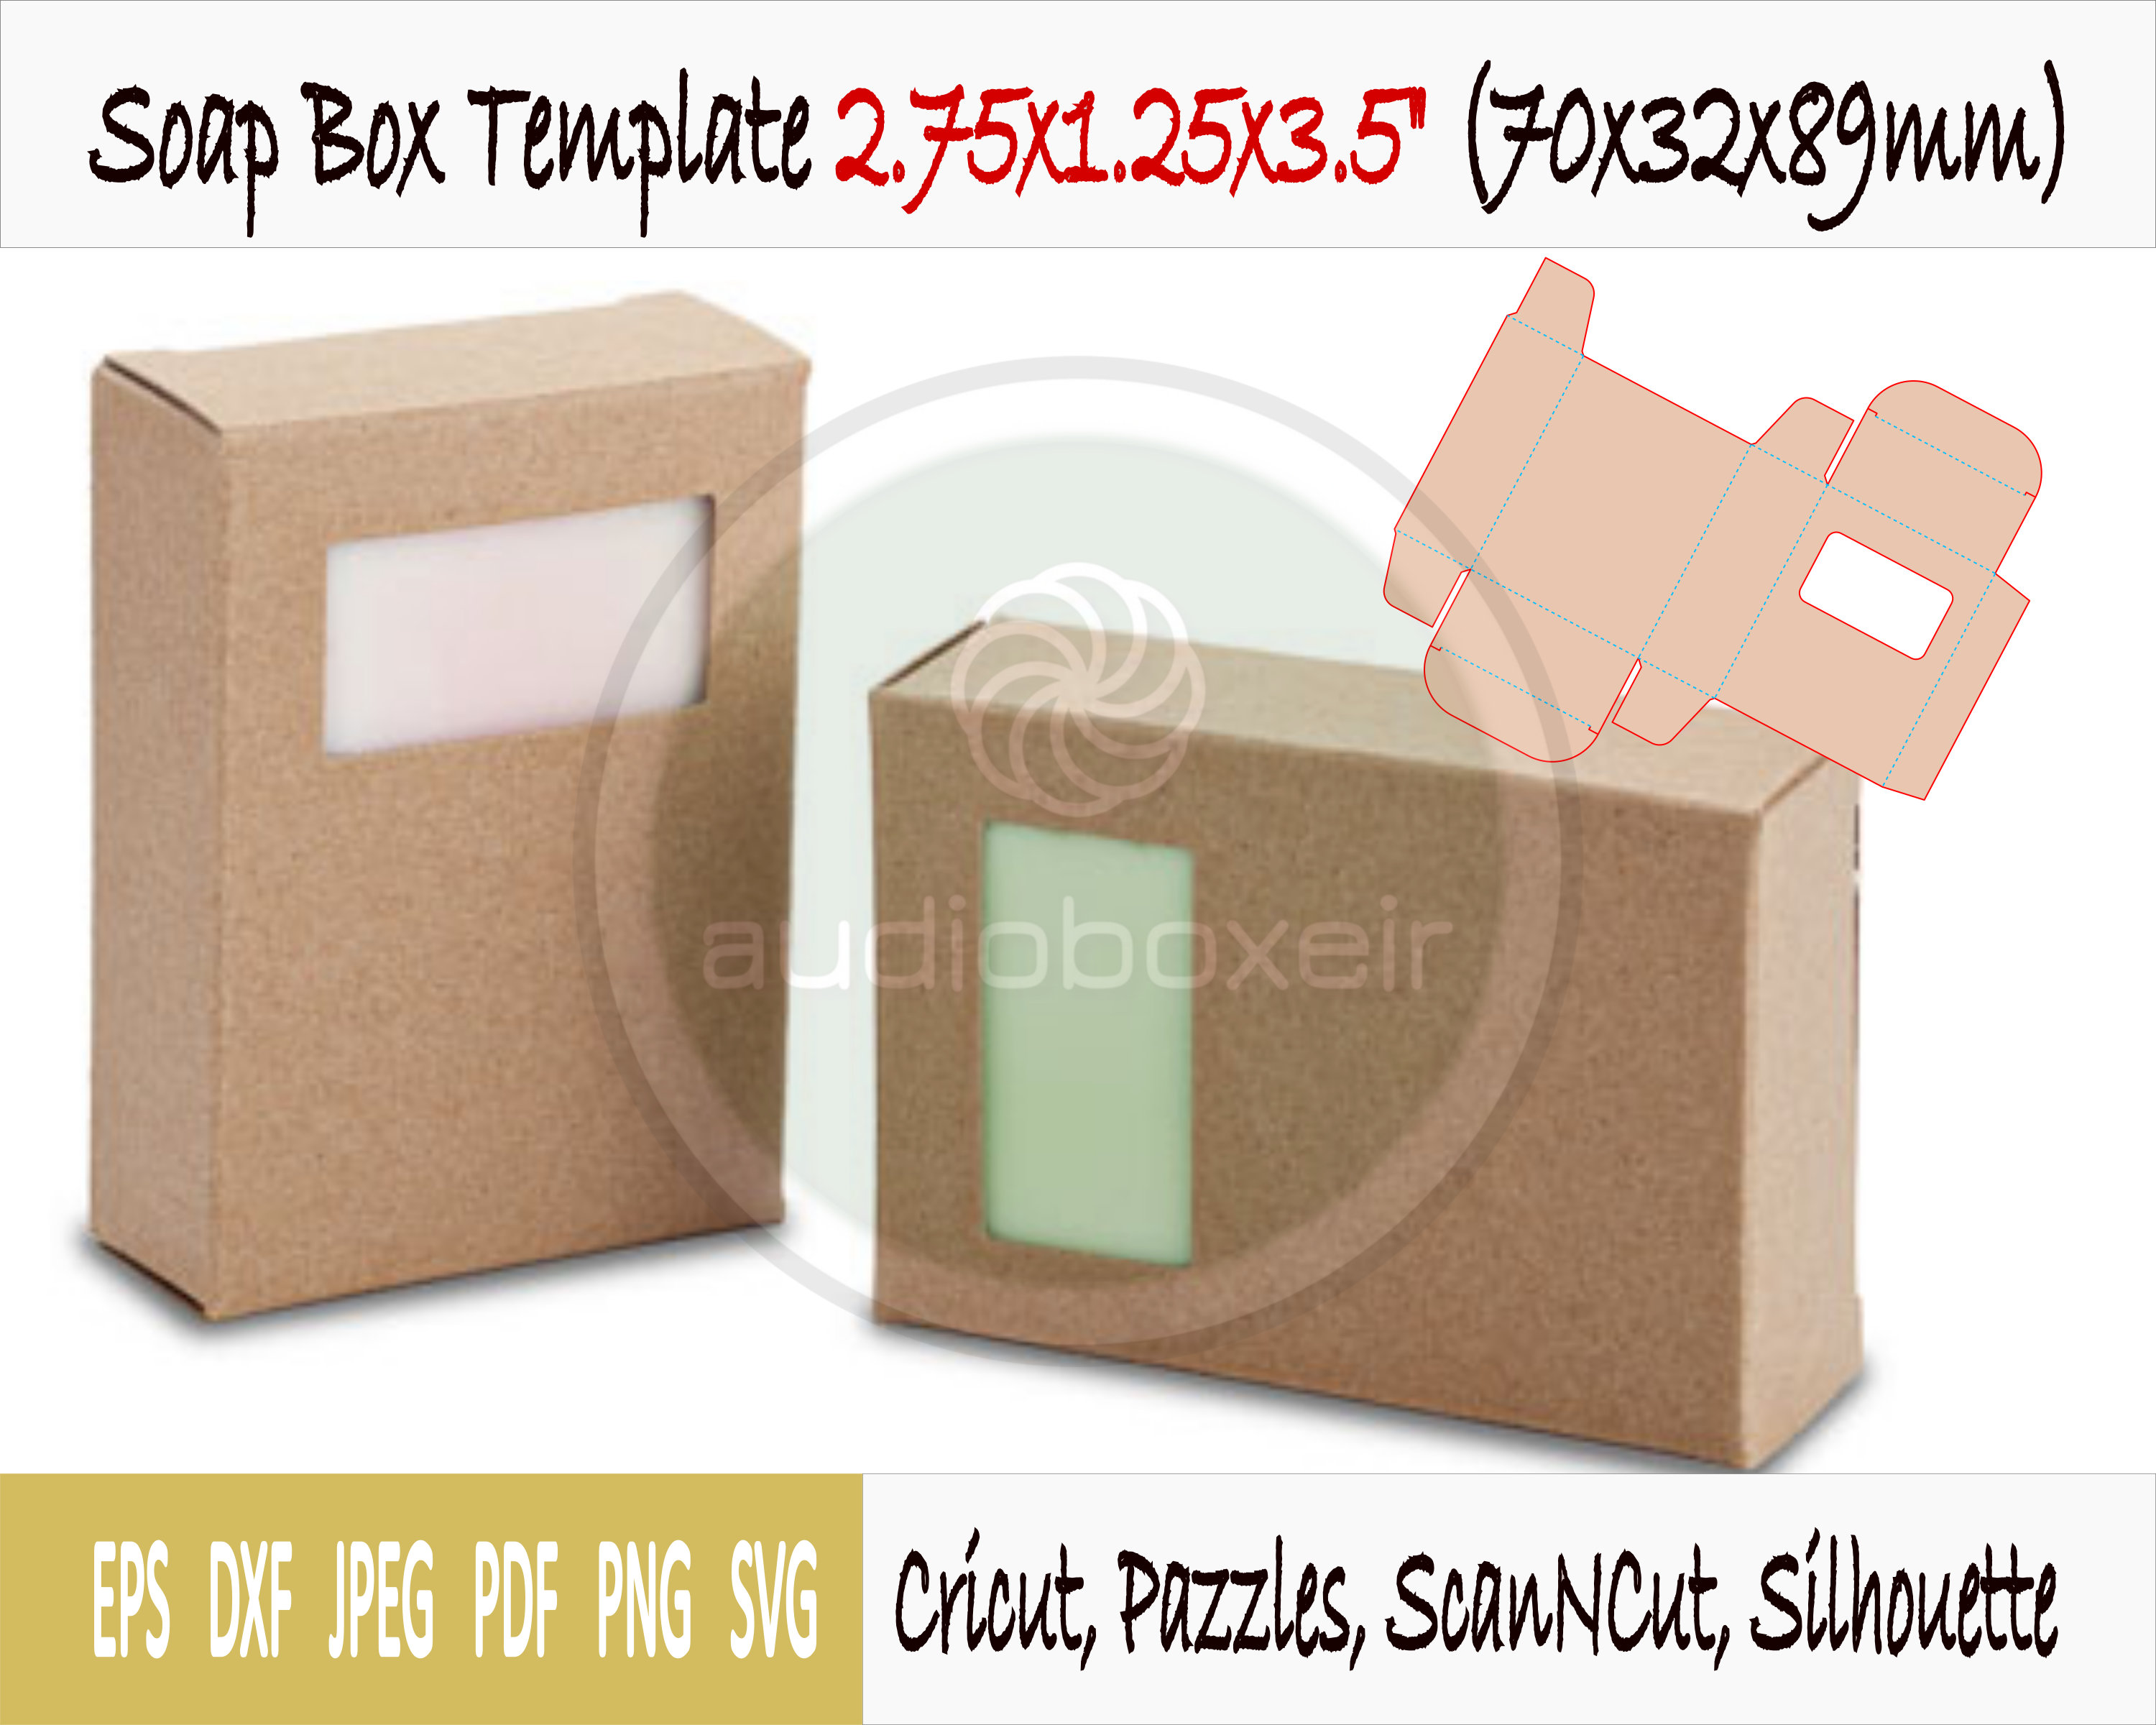 Handle-Top Soap Boxes